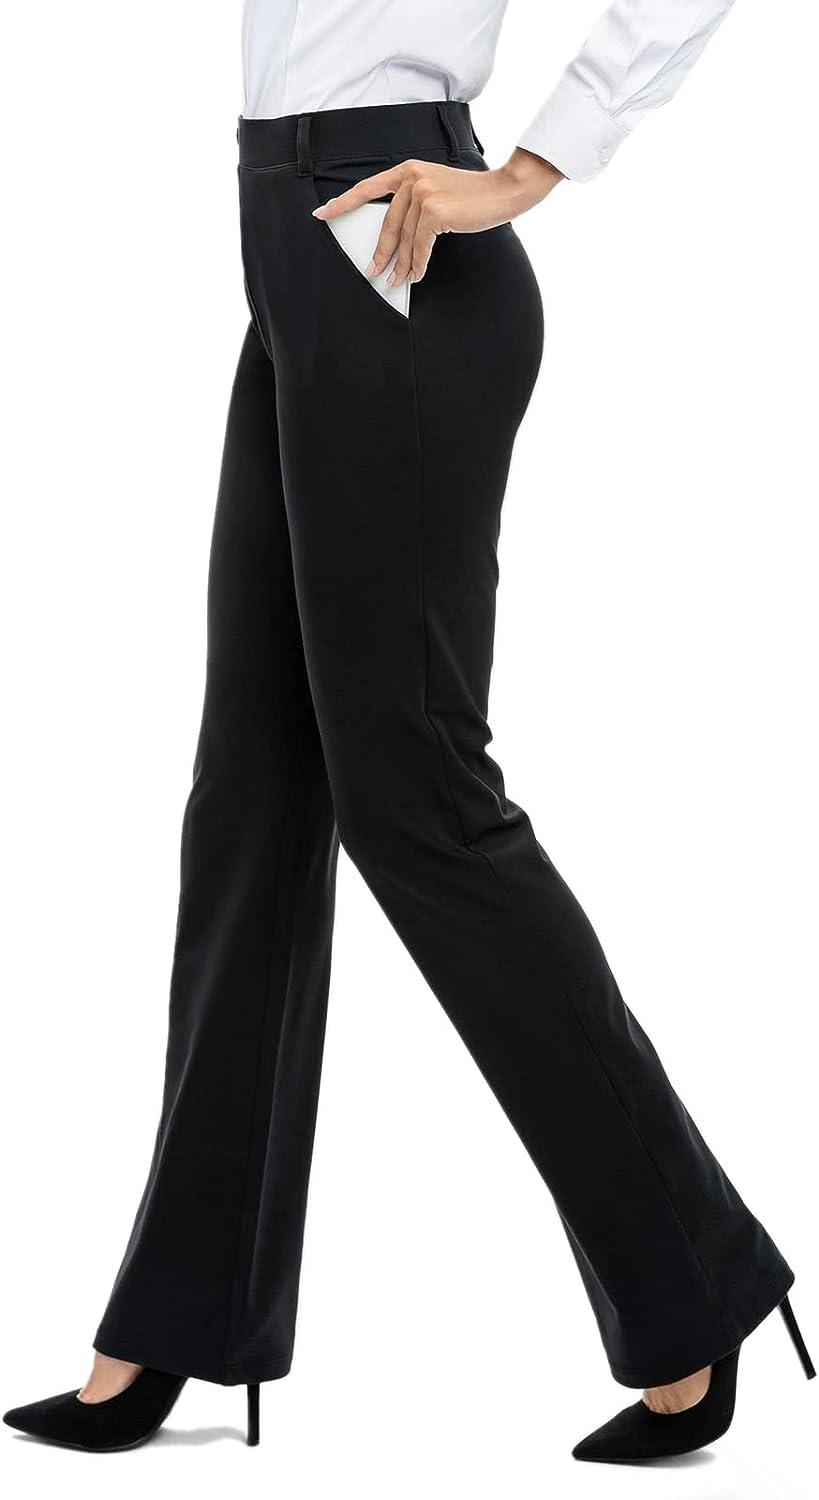  4 Pockets/Belt Loops,Petite Womens Bootcut Yoga Dress Pants  Work Slacks,27,Charcoal,Size XL